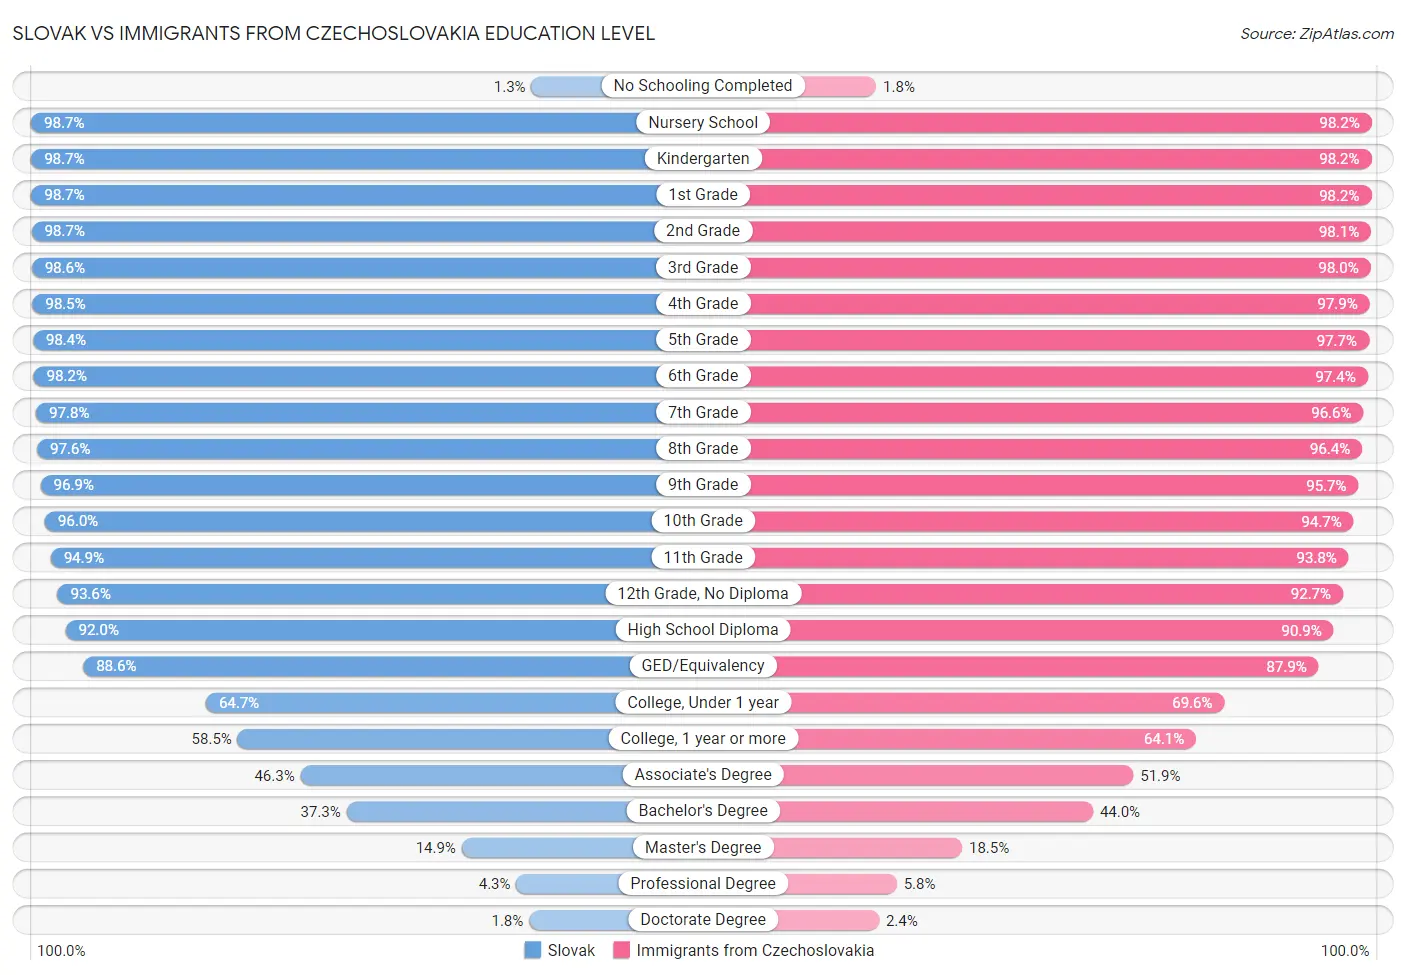 Slovak vs Immigrants from Czechoslovakia Education Level